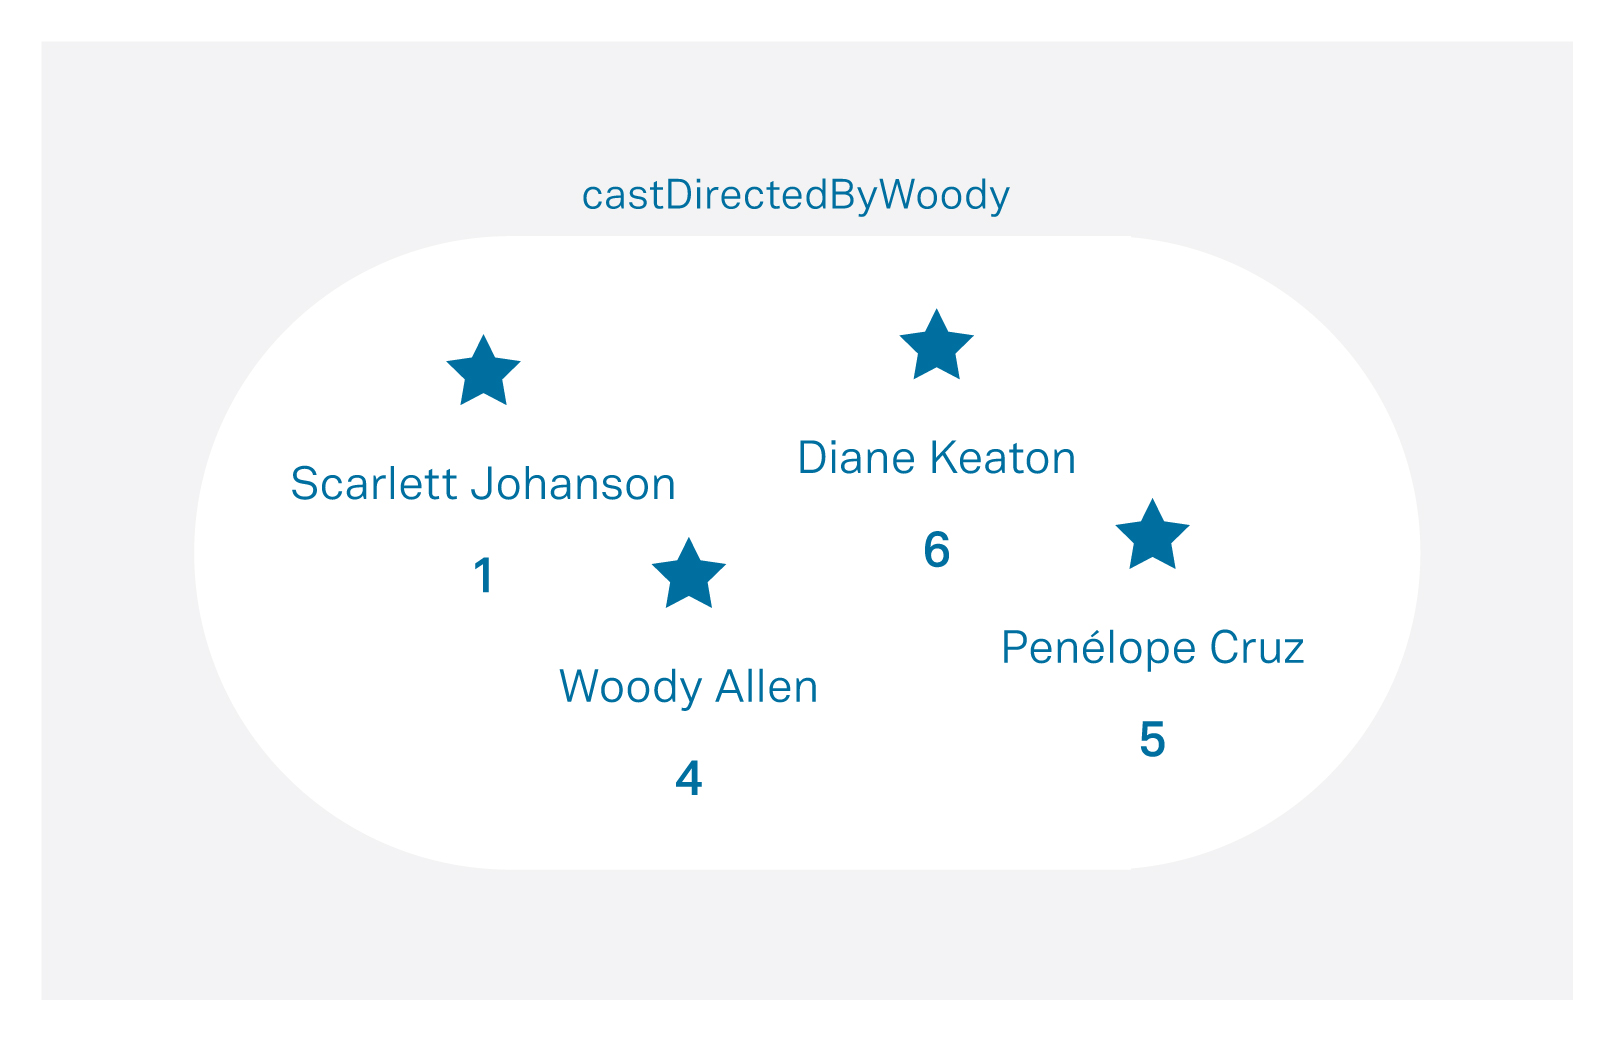 Figure 9: Cast in movies by Woody Allen